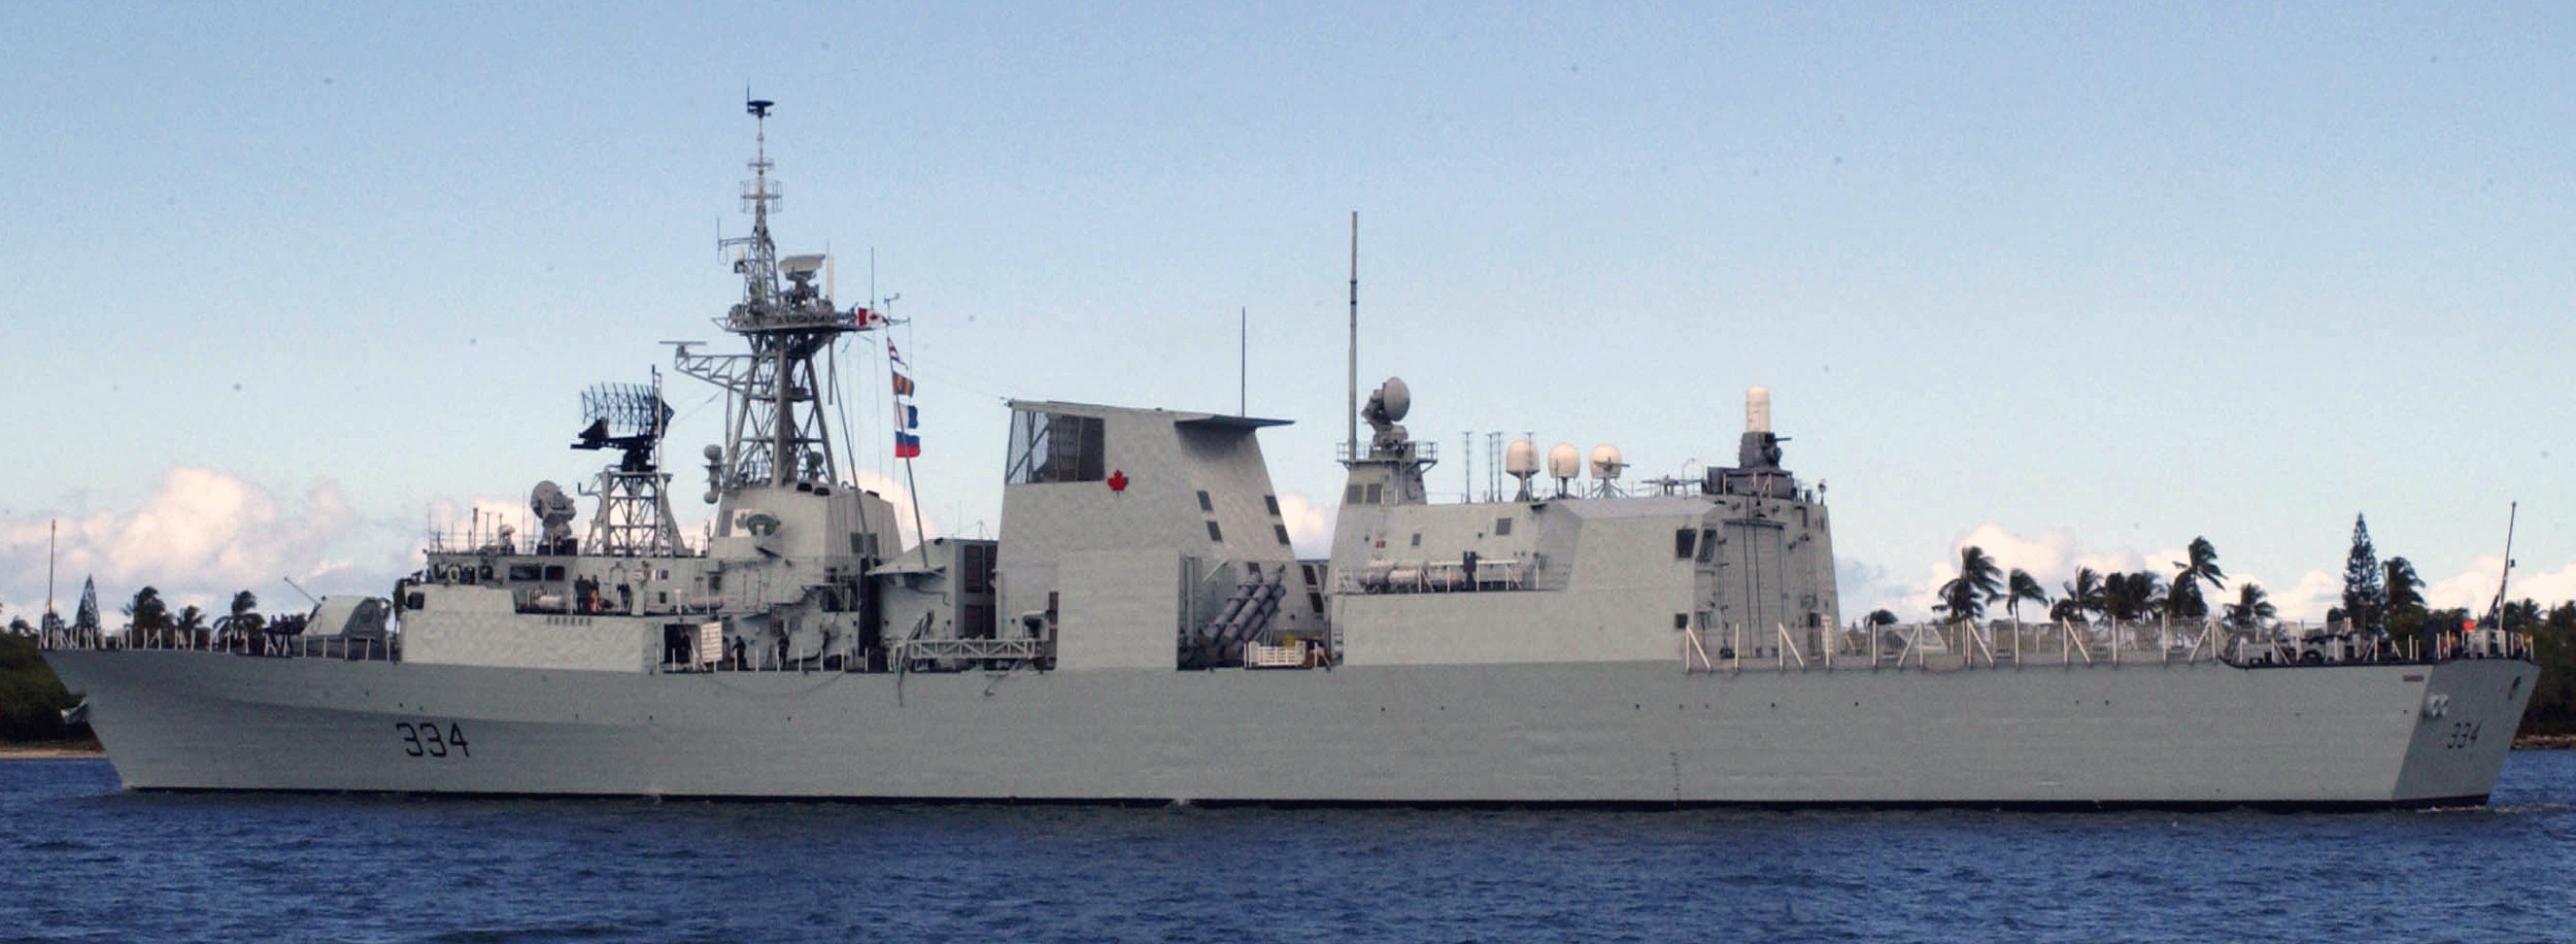 ffh-334 hmcs regina halifax class helicopter patrol frigate ncsm royal canadian navy 21